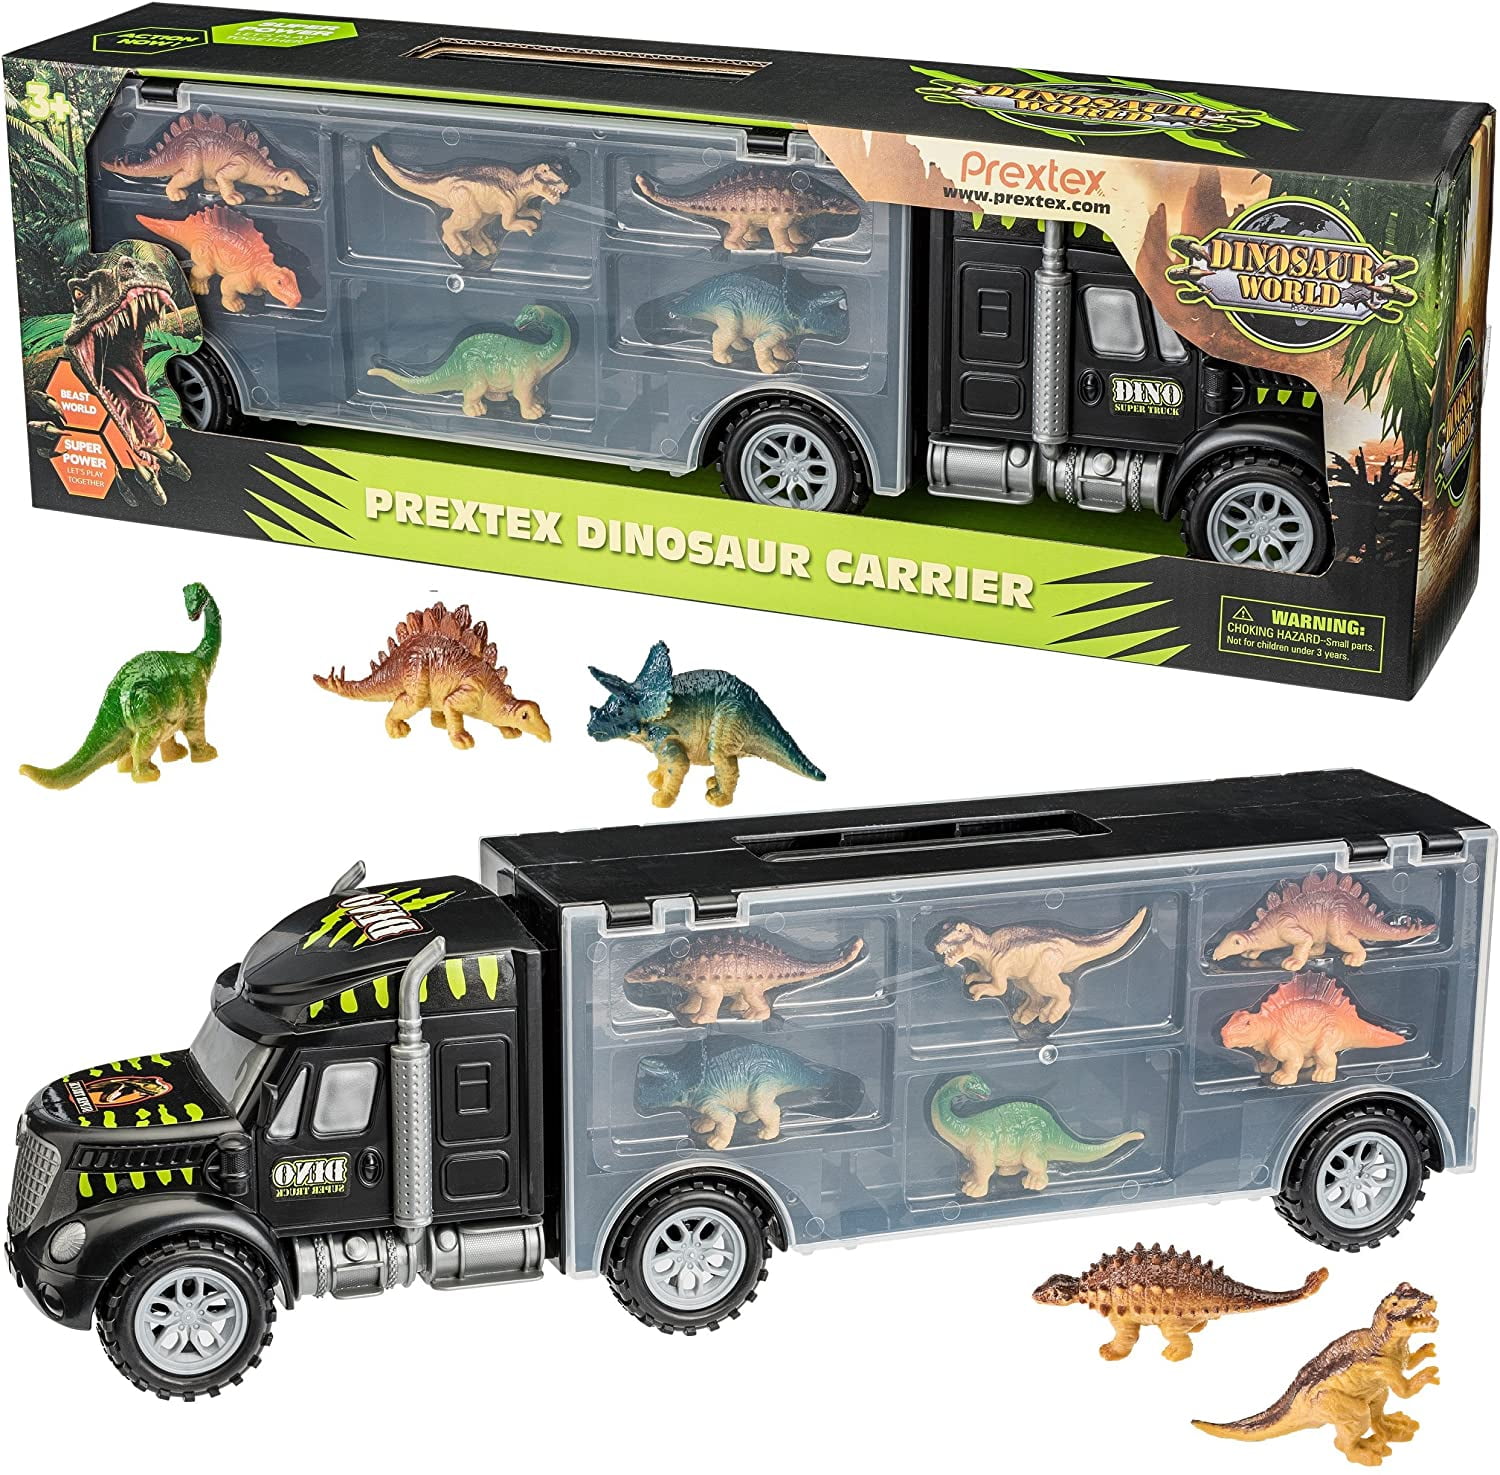 Includes Dinosaur and Cars UK-DS917-DINO Urban Kit Dinosaur Storage Carrier 